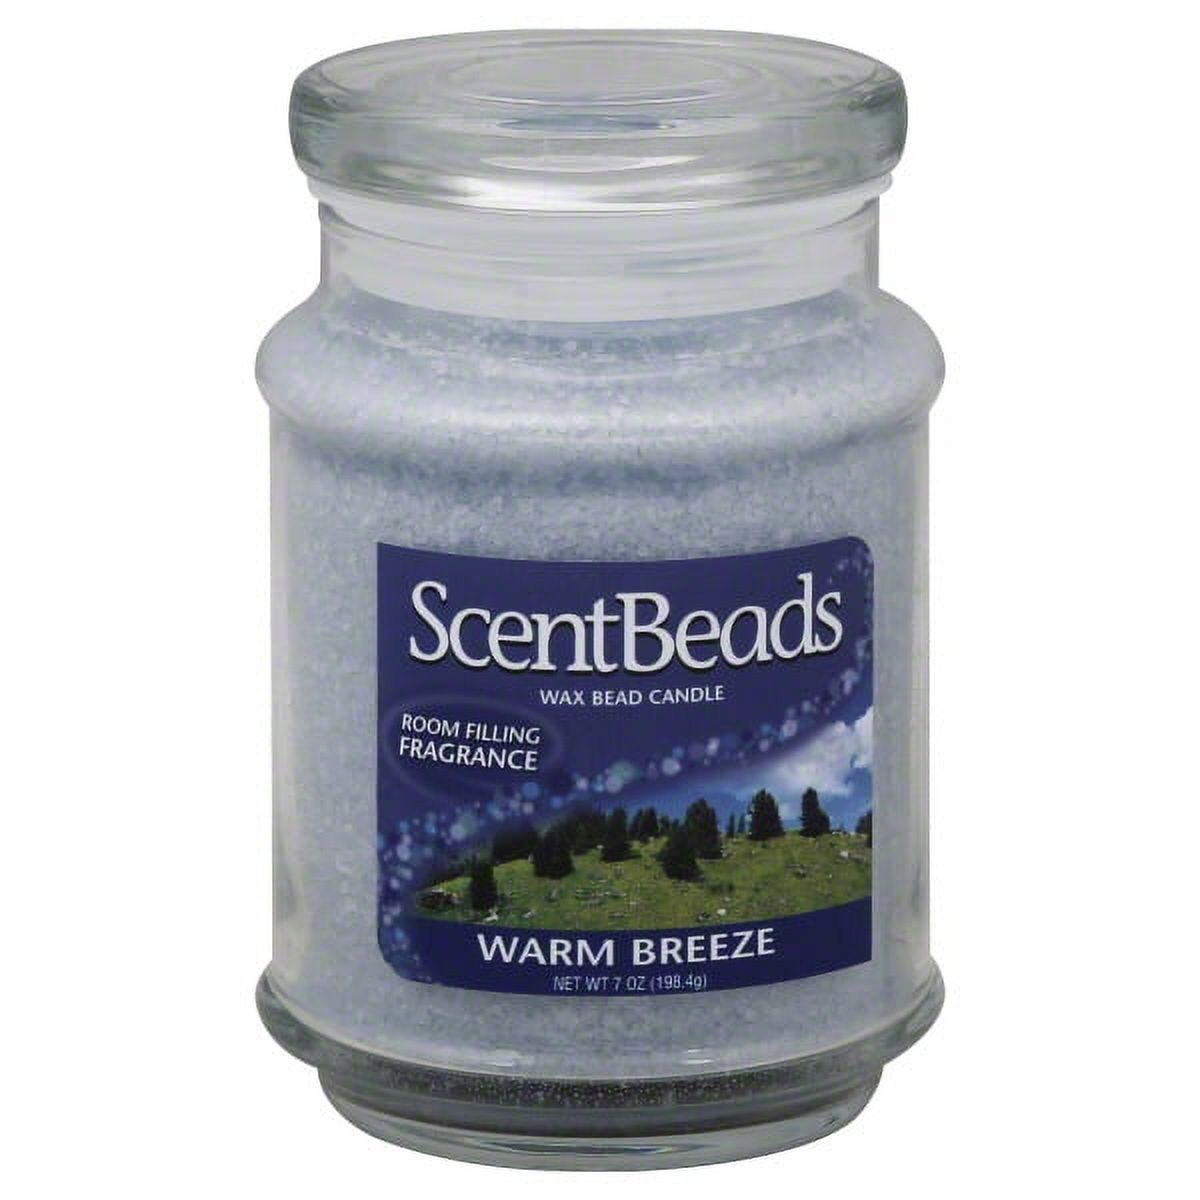 ScentBeads Wax Bead Candle Warm Breeze 7oz